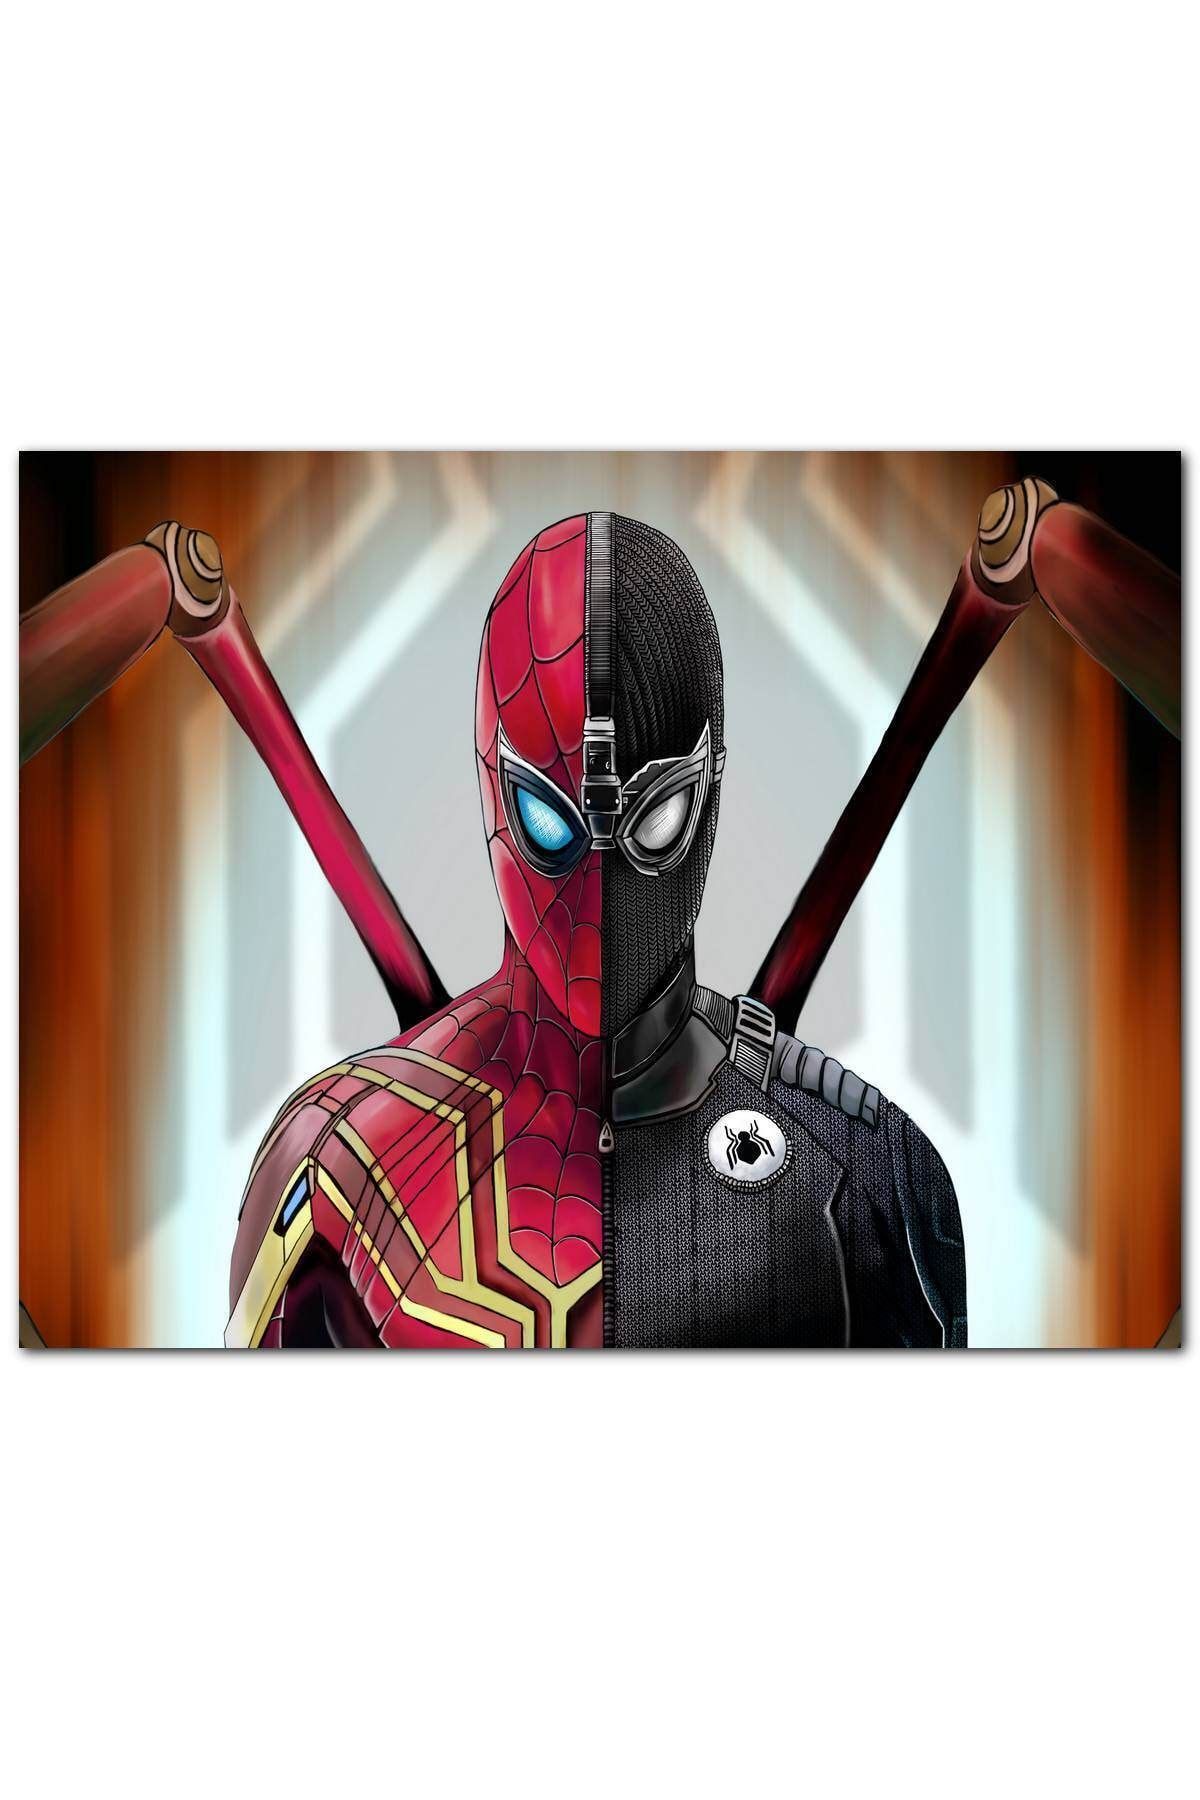 Cakatablo Ahşap Tablo Spider Man Iki Kostüm Birarada (50x70 Cm Boyut)